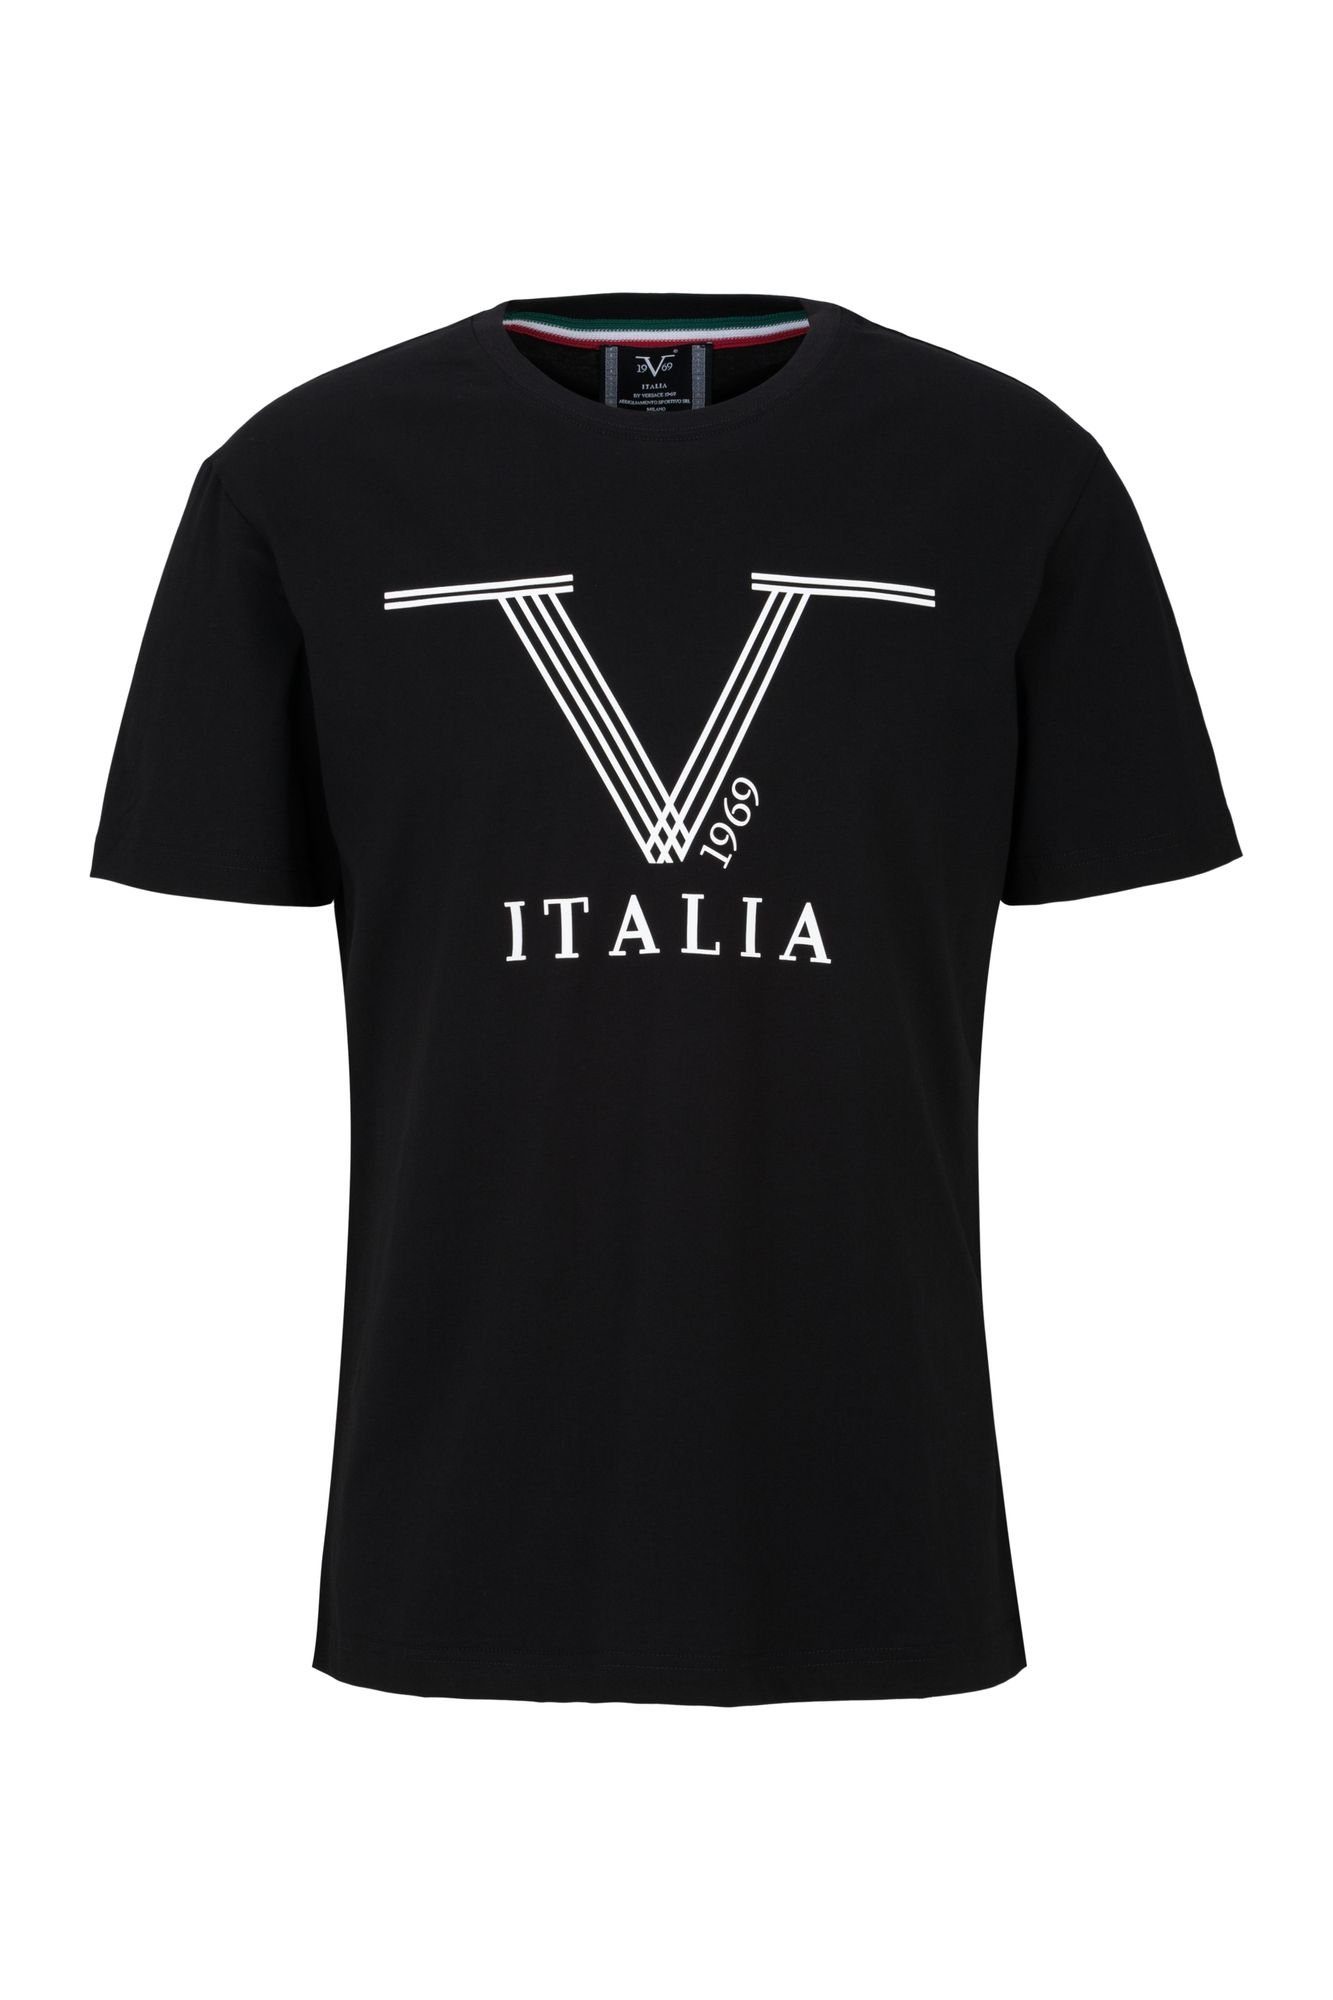 19V69 Italia by Versace T-Shirt by Versace Sportivo SRL - Pierre BLACK